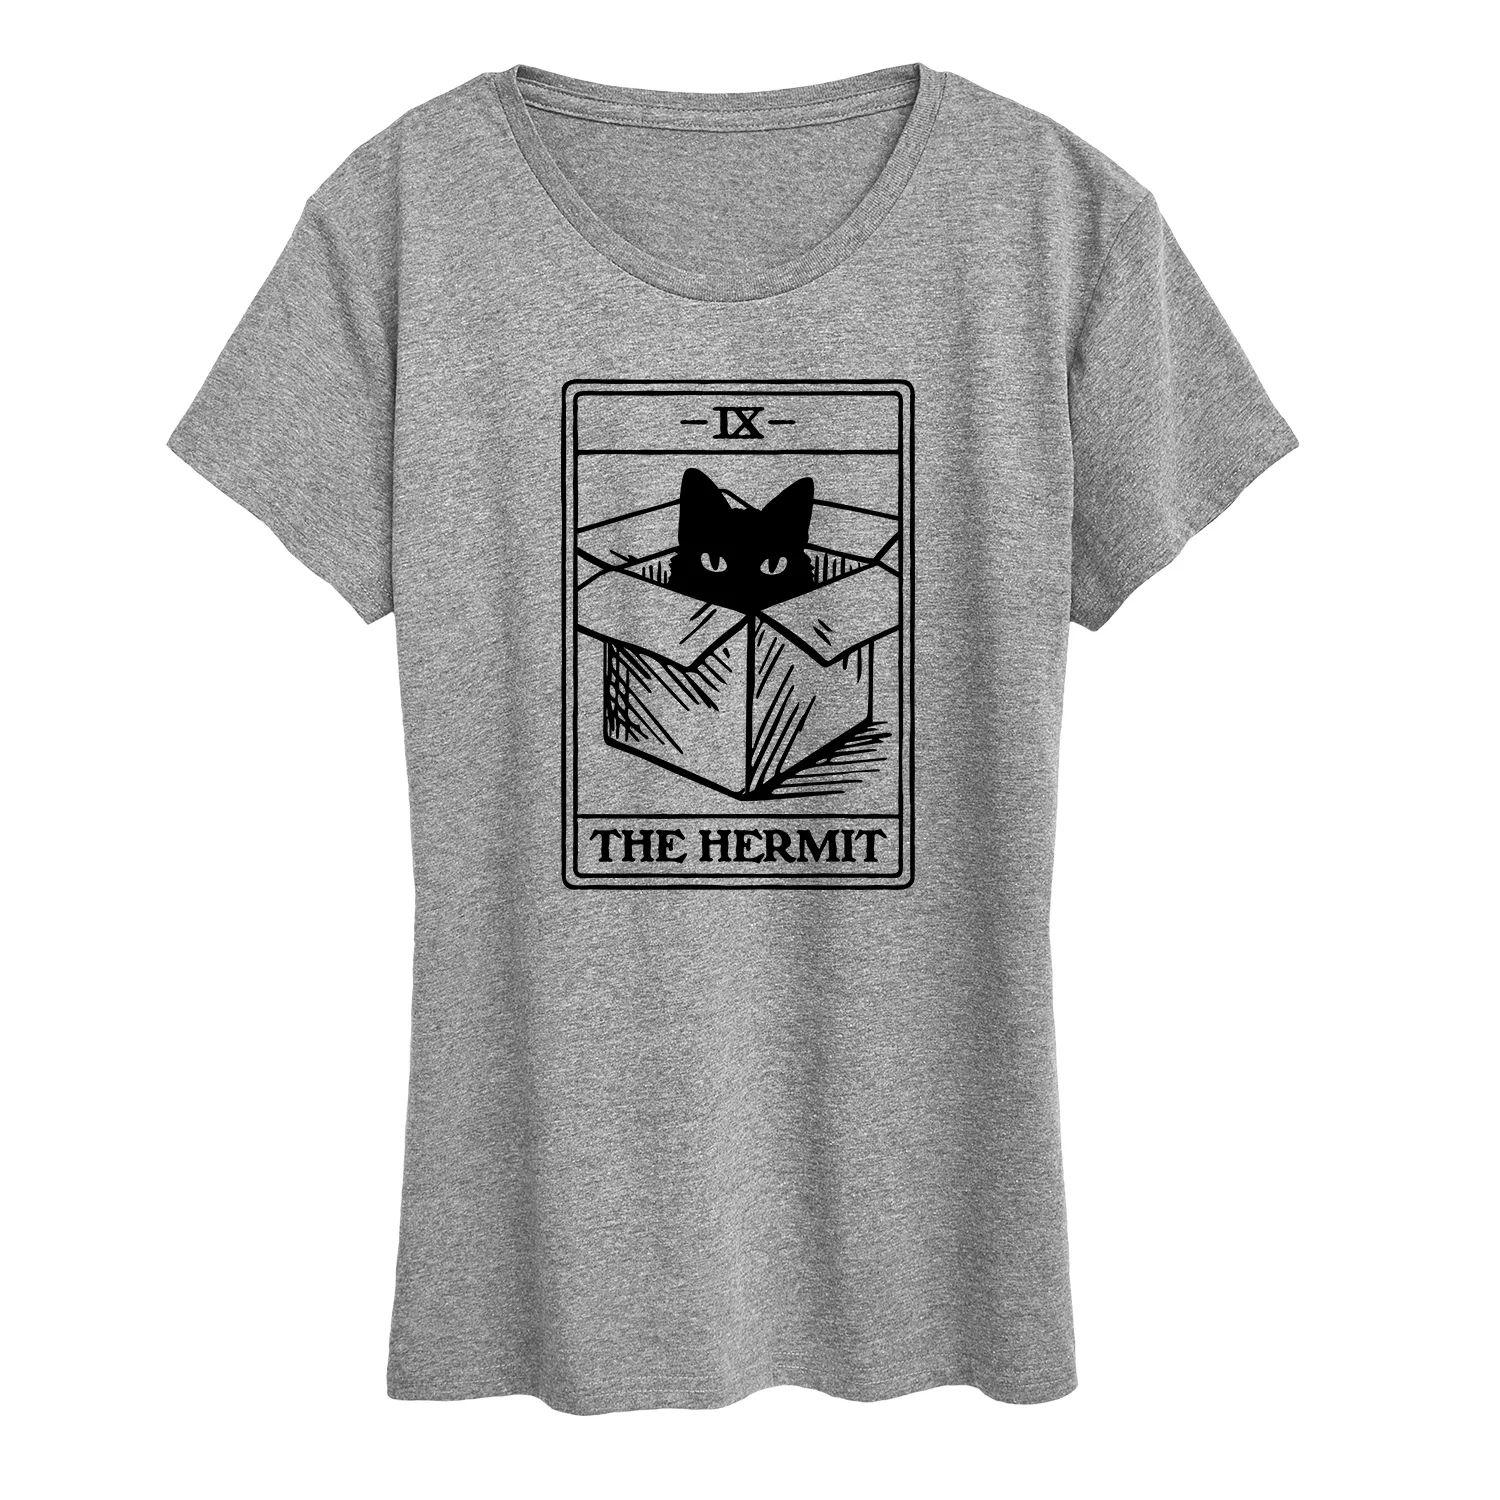 Женская футболка с рисунком карт Таро The Hermit Cat Licensed Character 100 шт настольная игра таро с надписью hermit